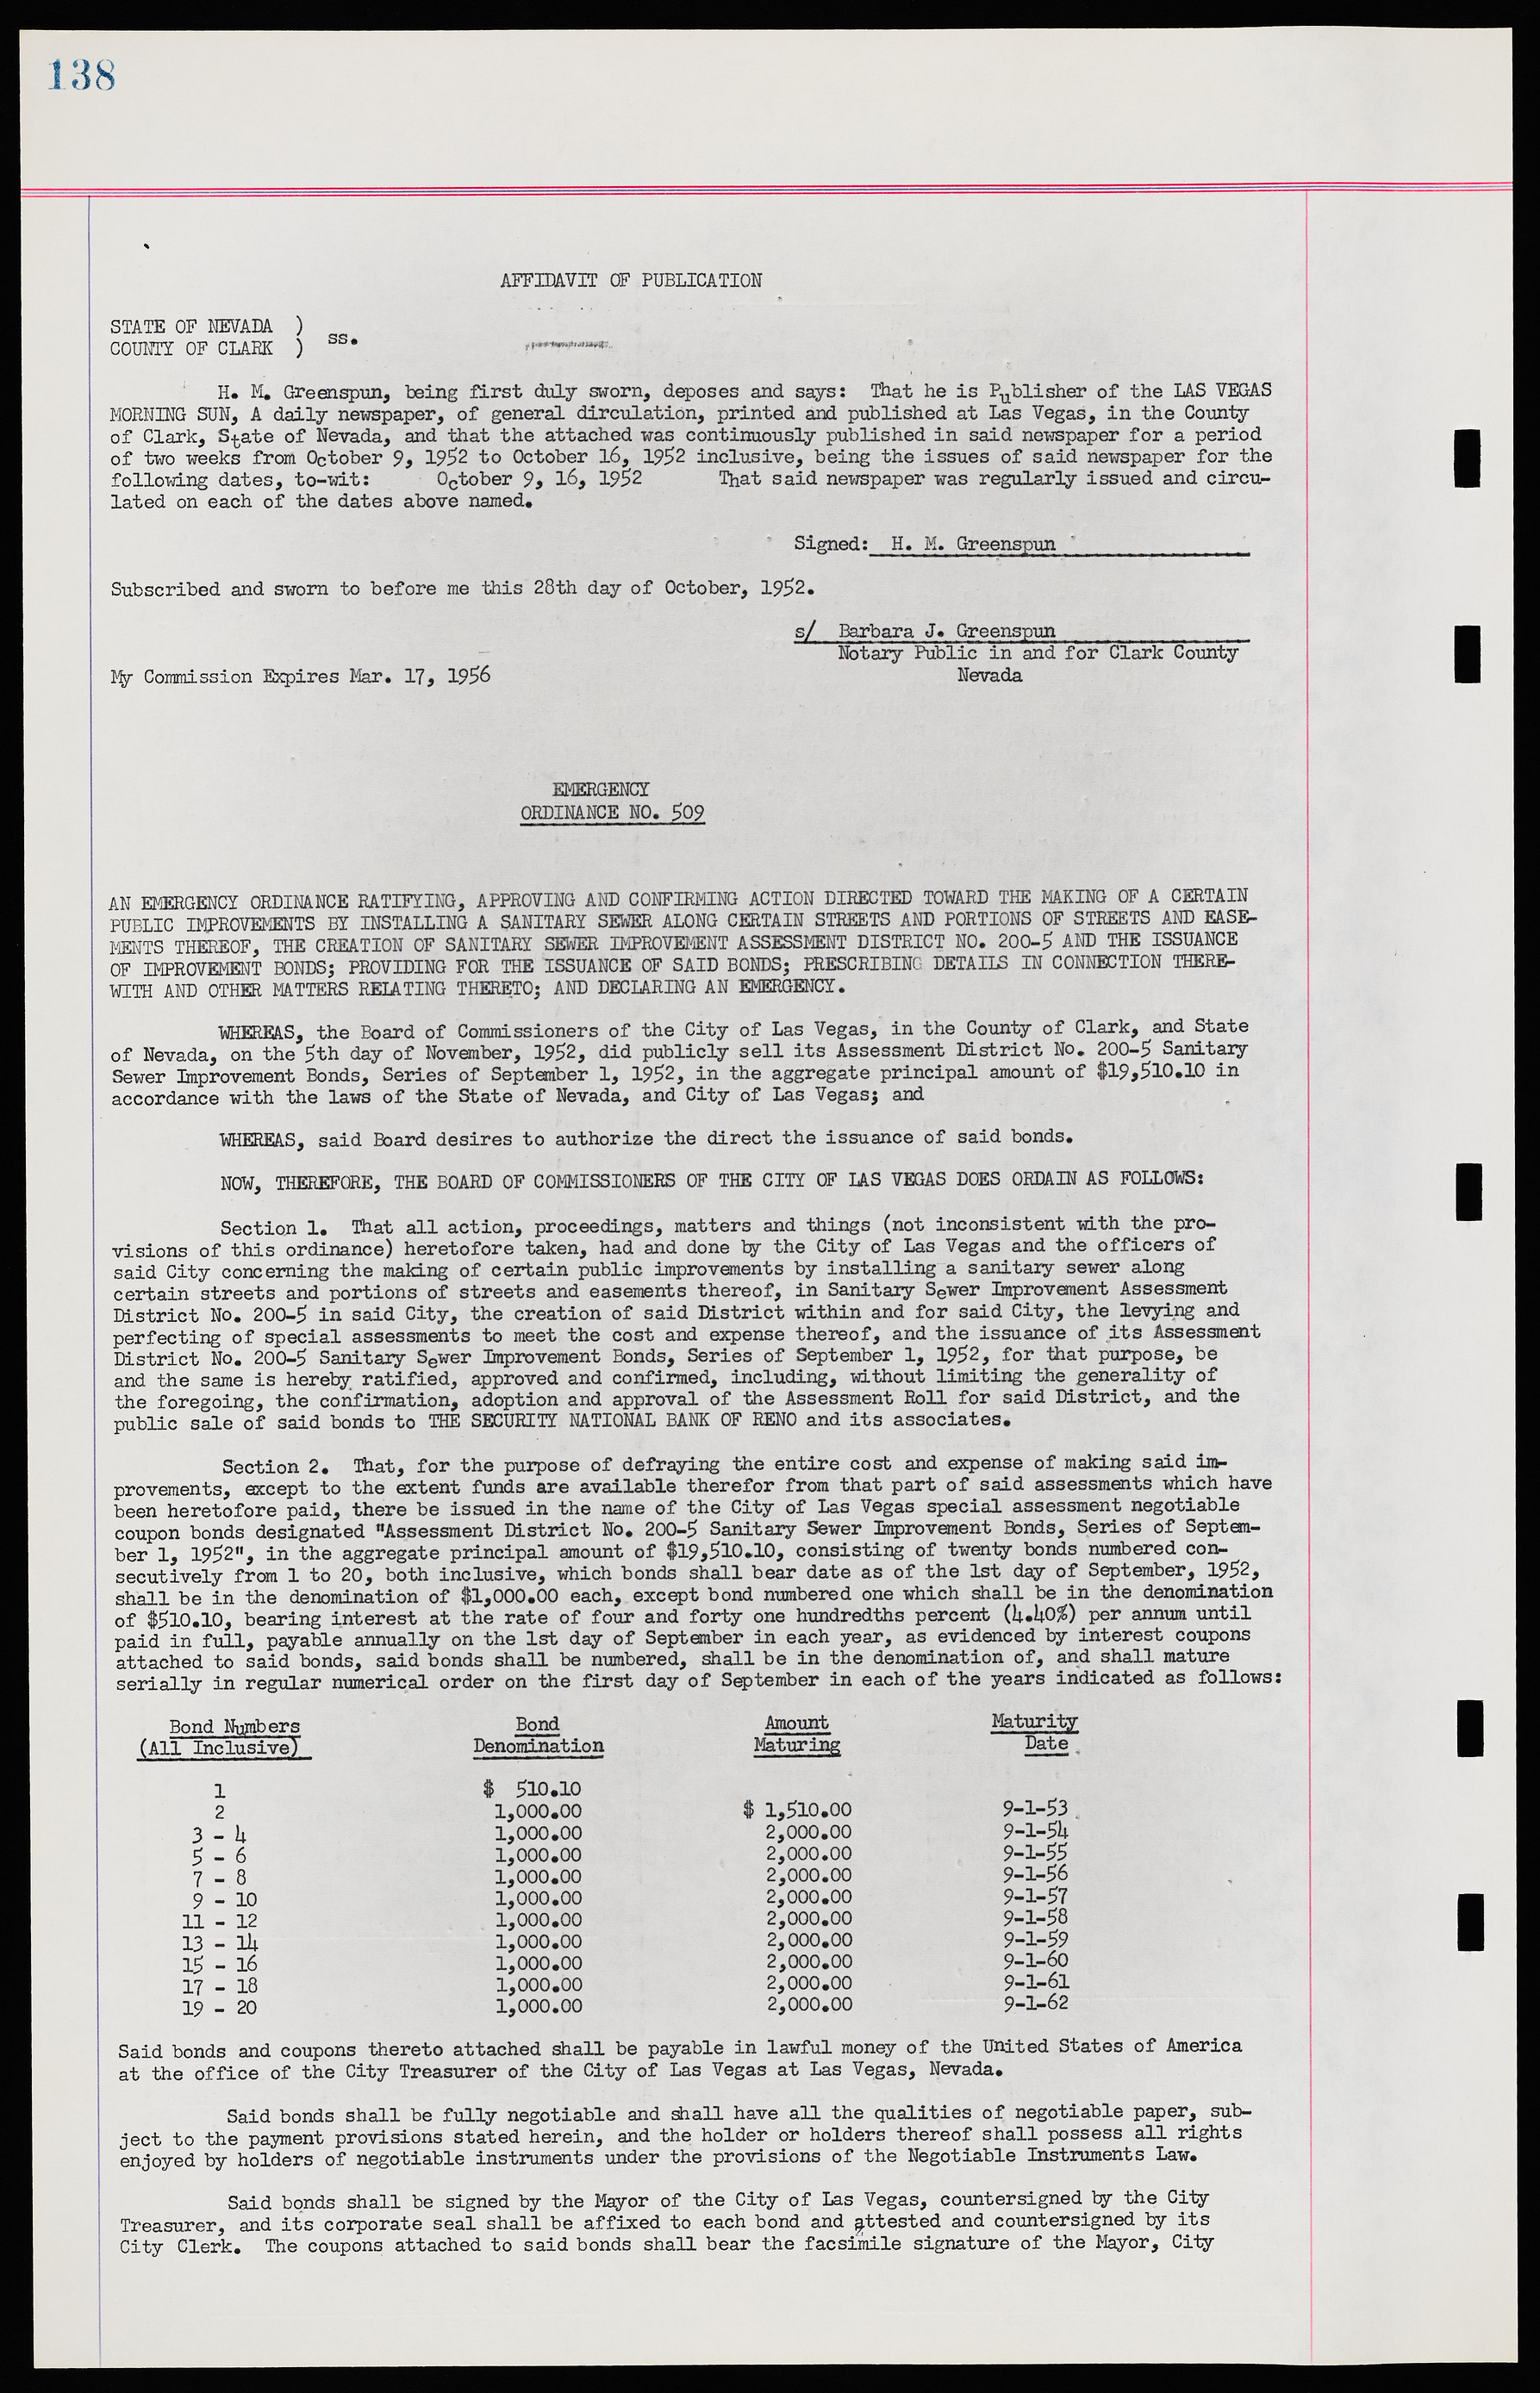 Las Vegas City Ordinances, November 13, 1950 to August 6, 1958, lvc000015-146